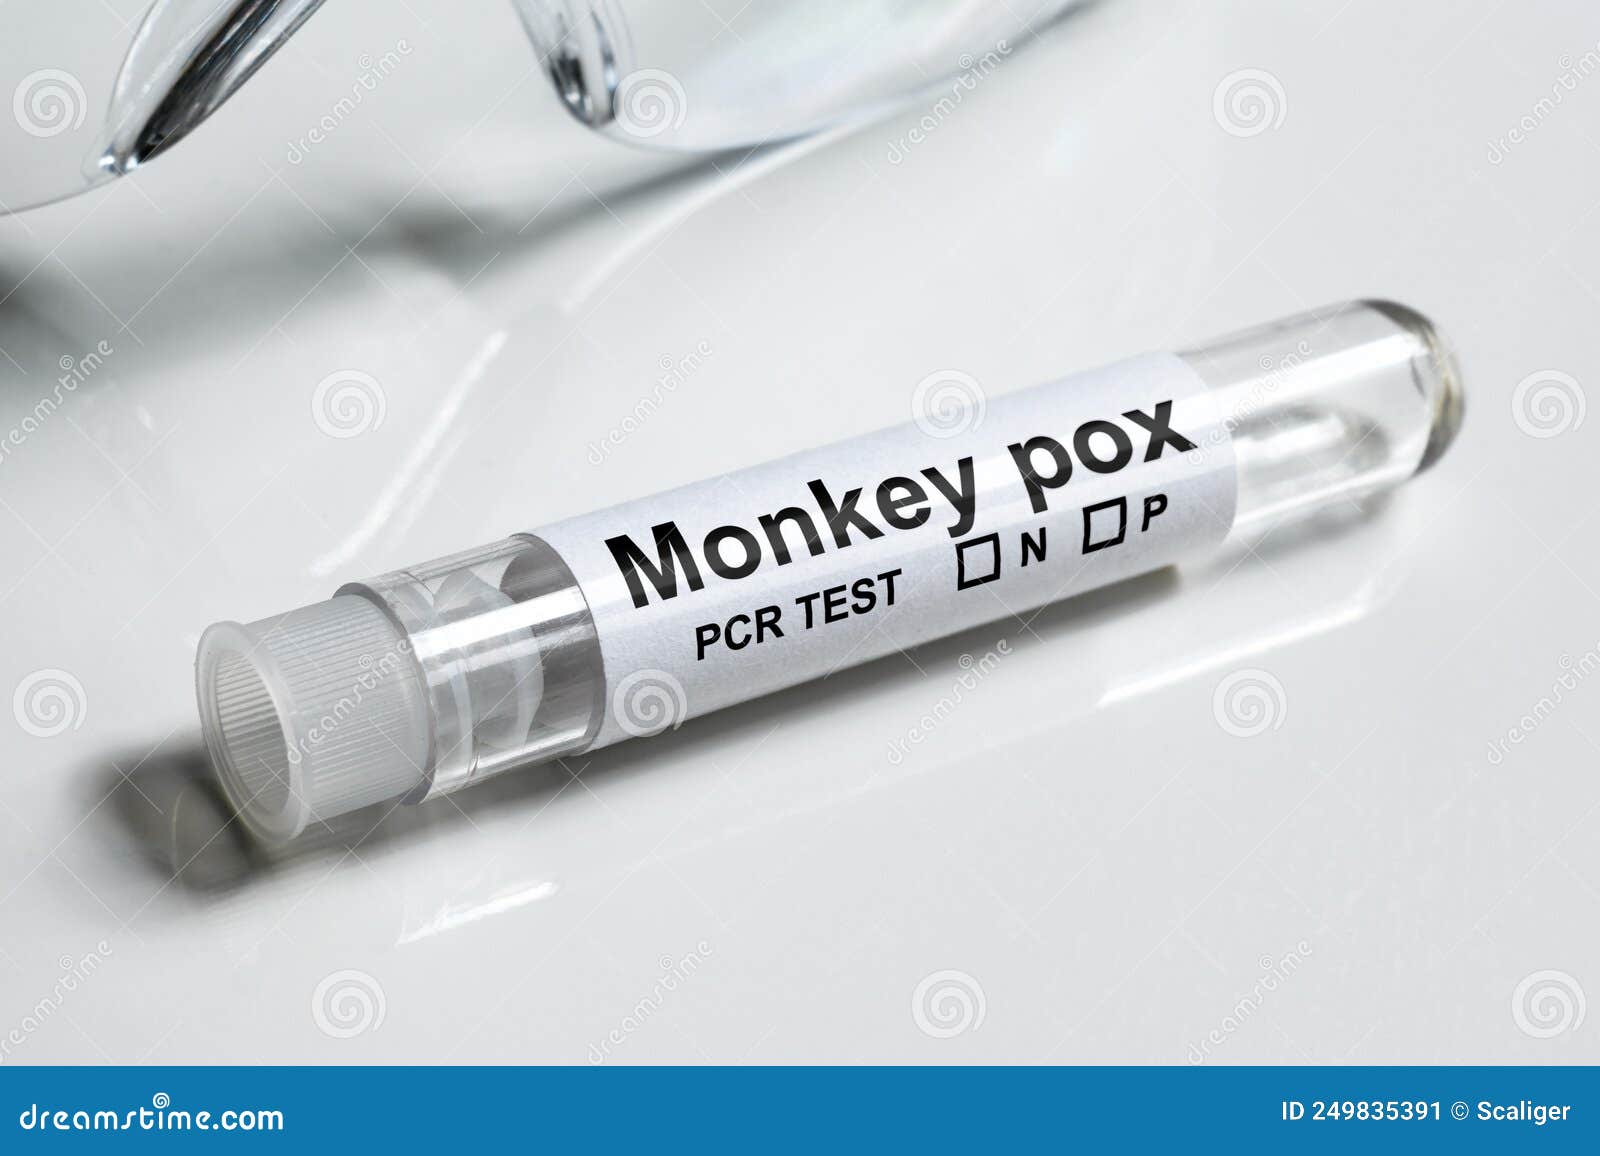 monkeypox pcr test tube close-up. equipment for monkey pox virus diagnostics